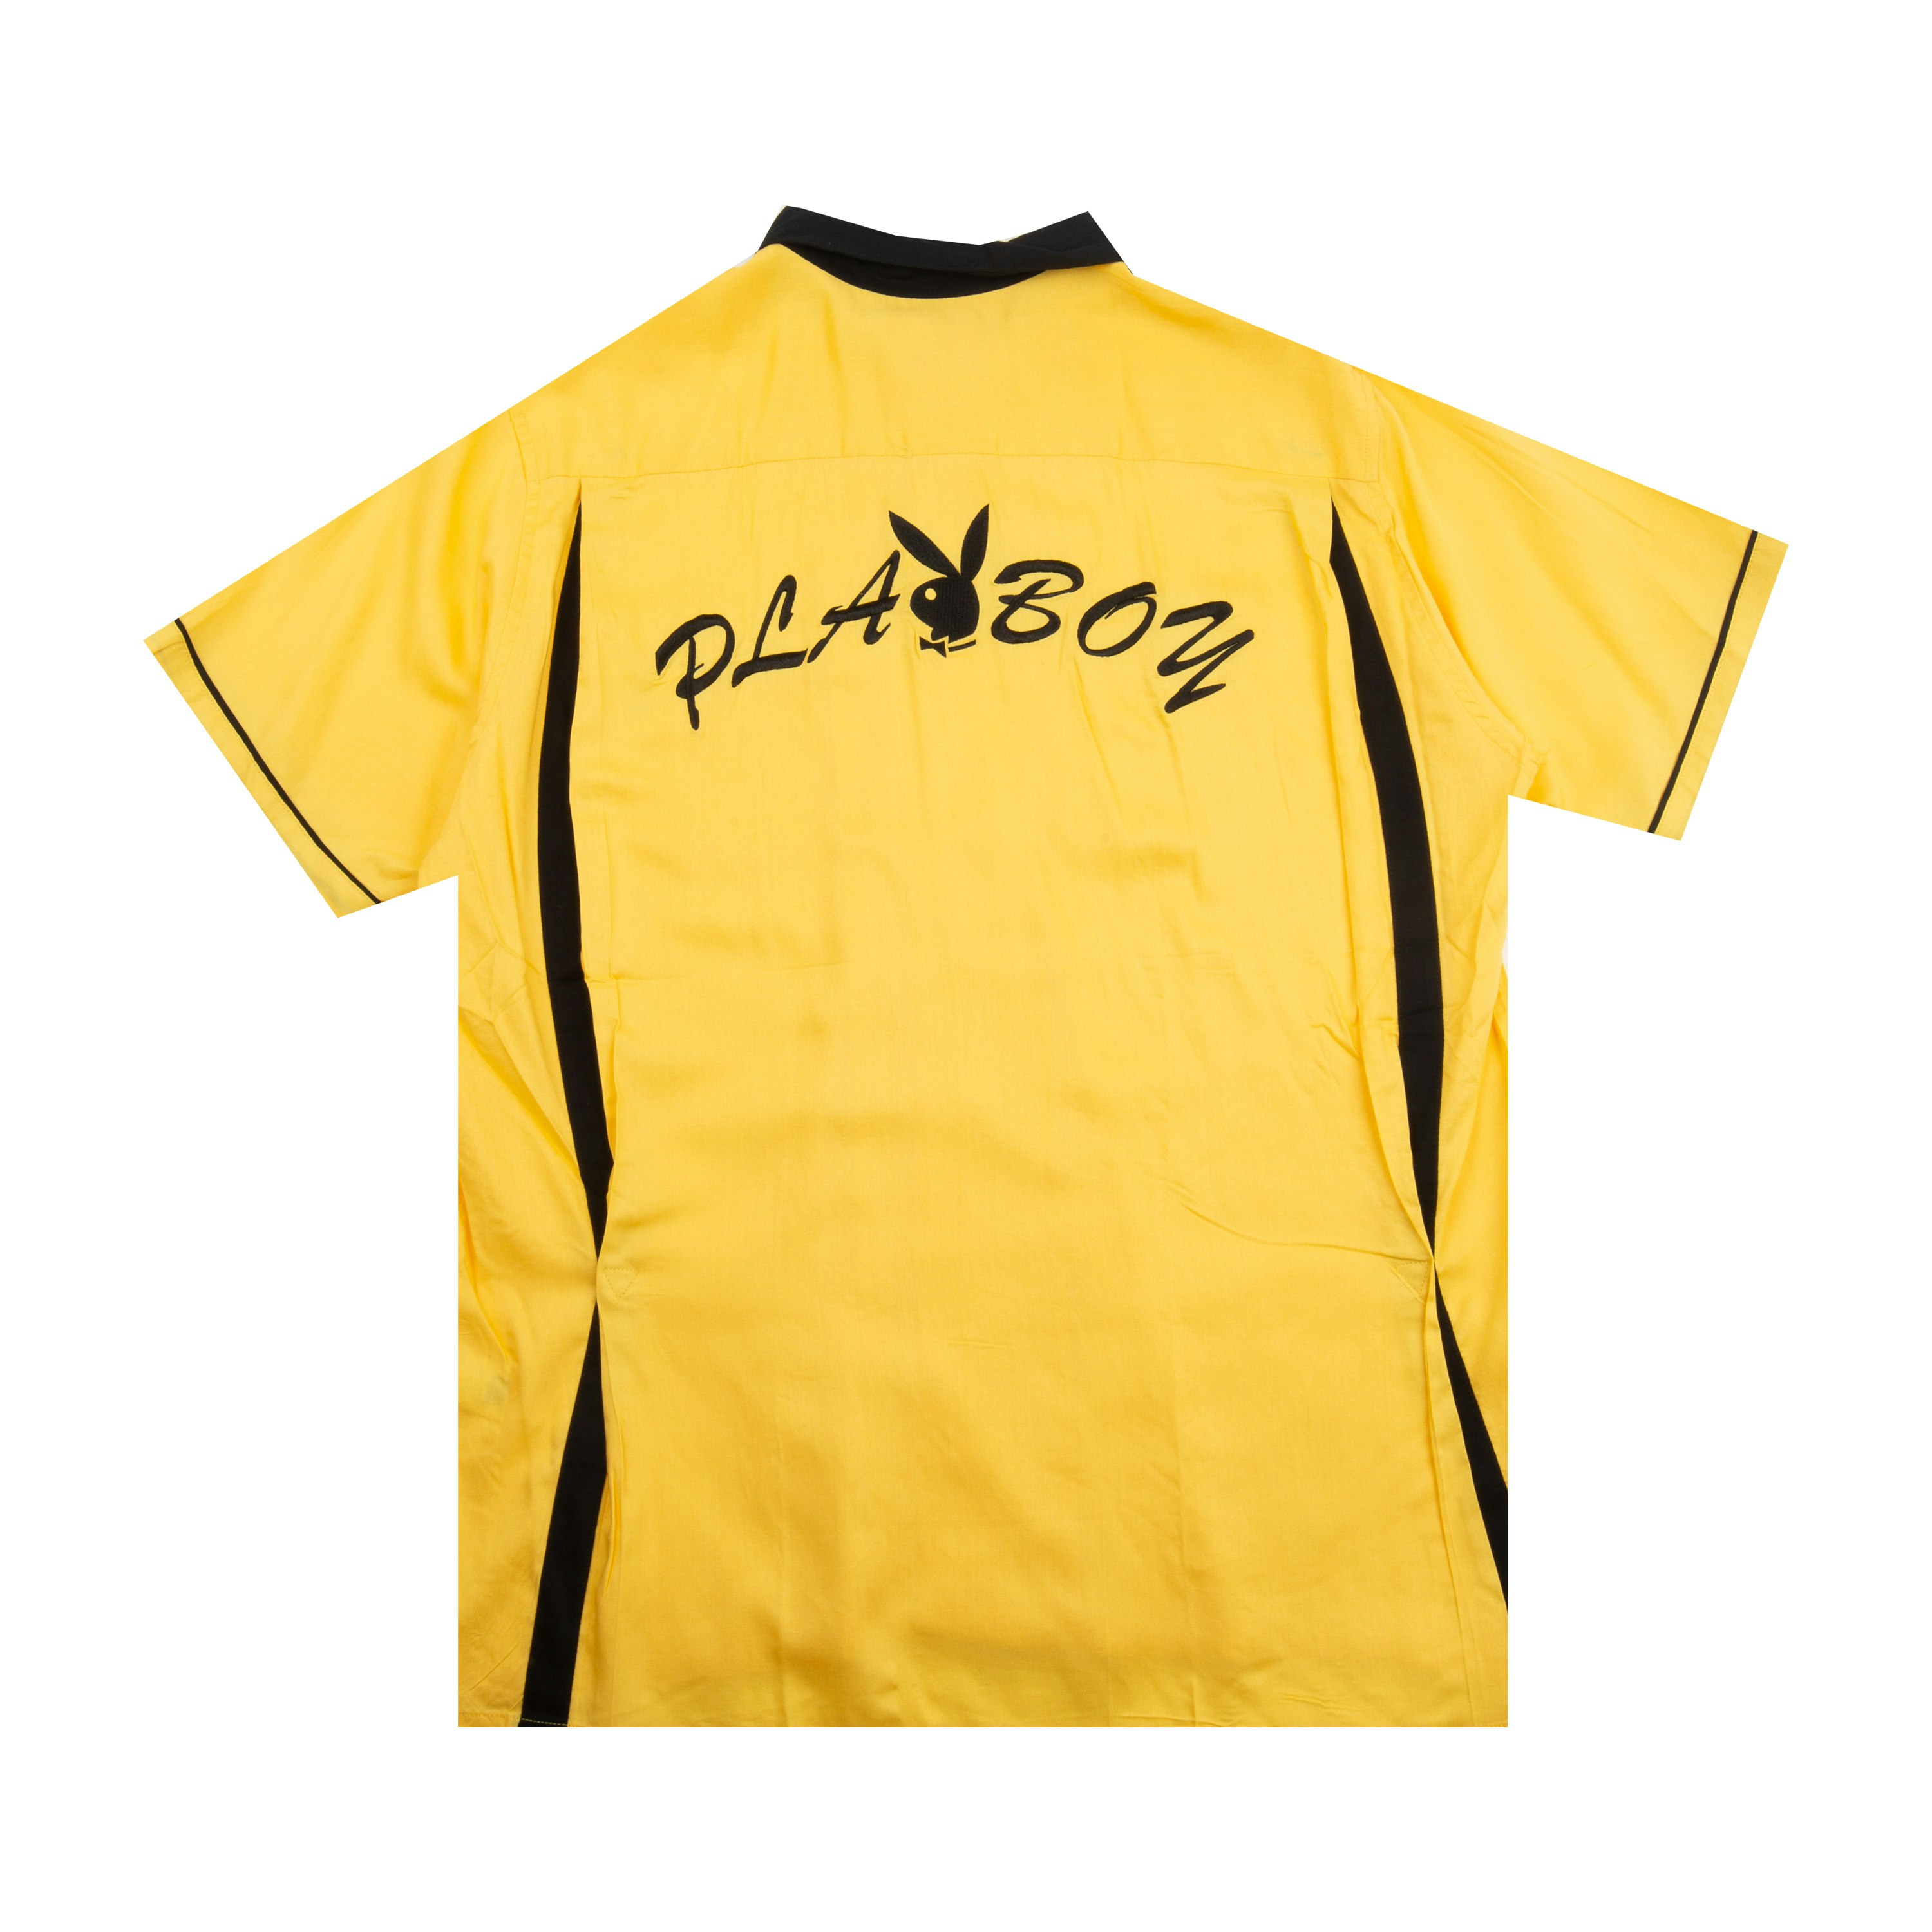 Supreme Playboy Bowling Shirt Yellow - SS17